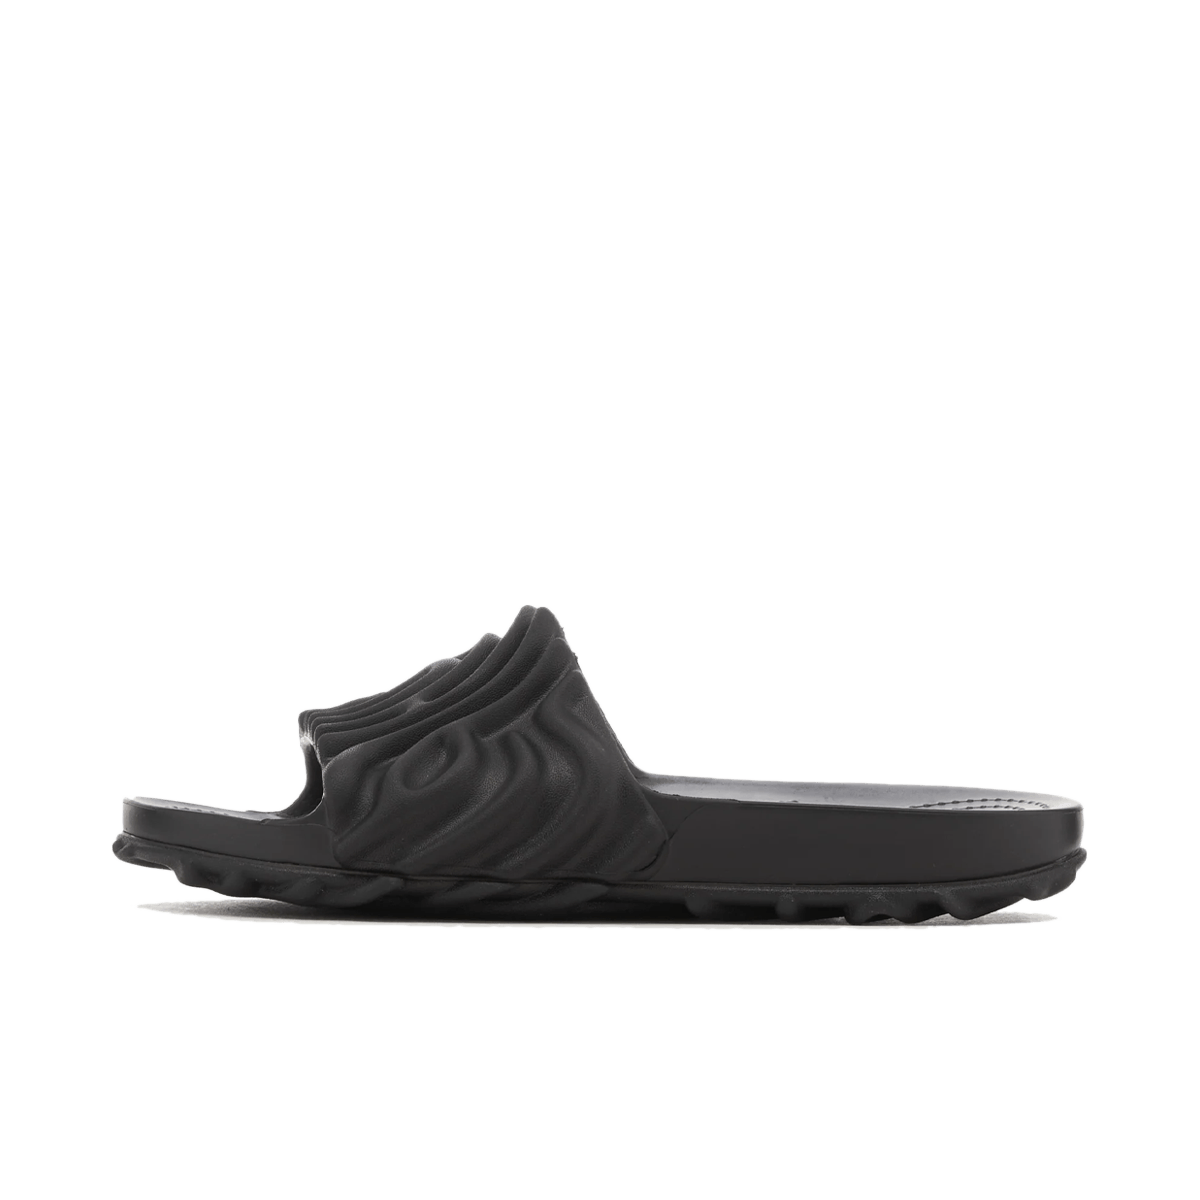 Salehe Bembury x Crocs Pollex Slide 'Sasquatch' 208685-0KV